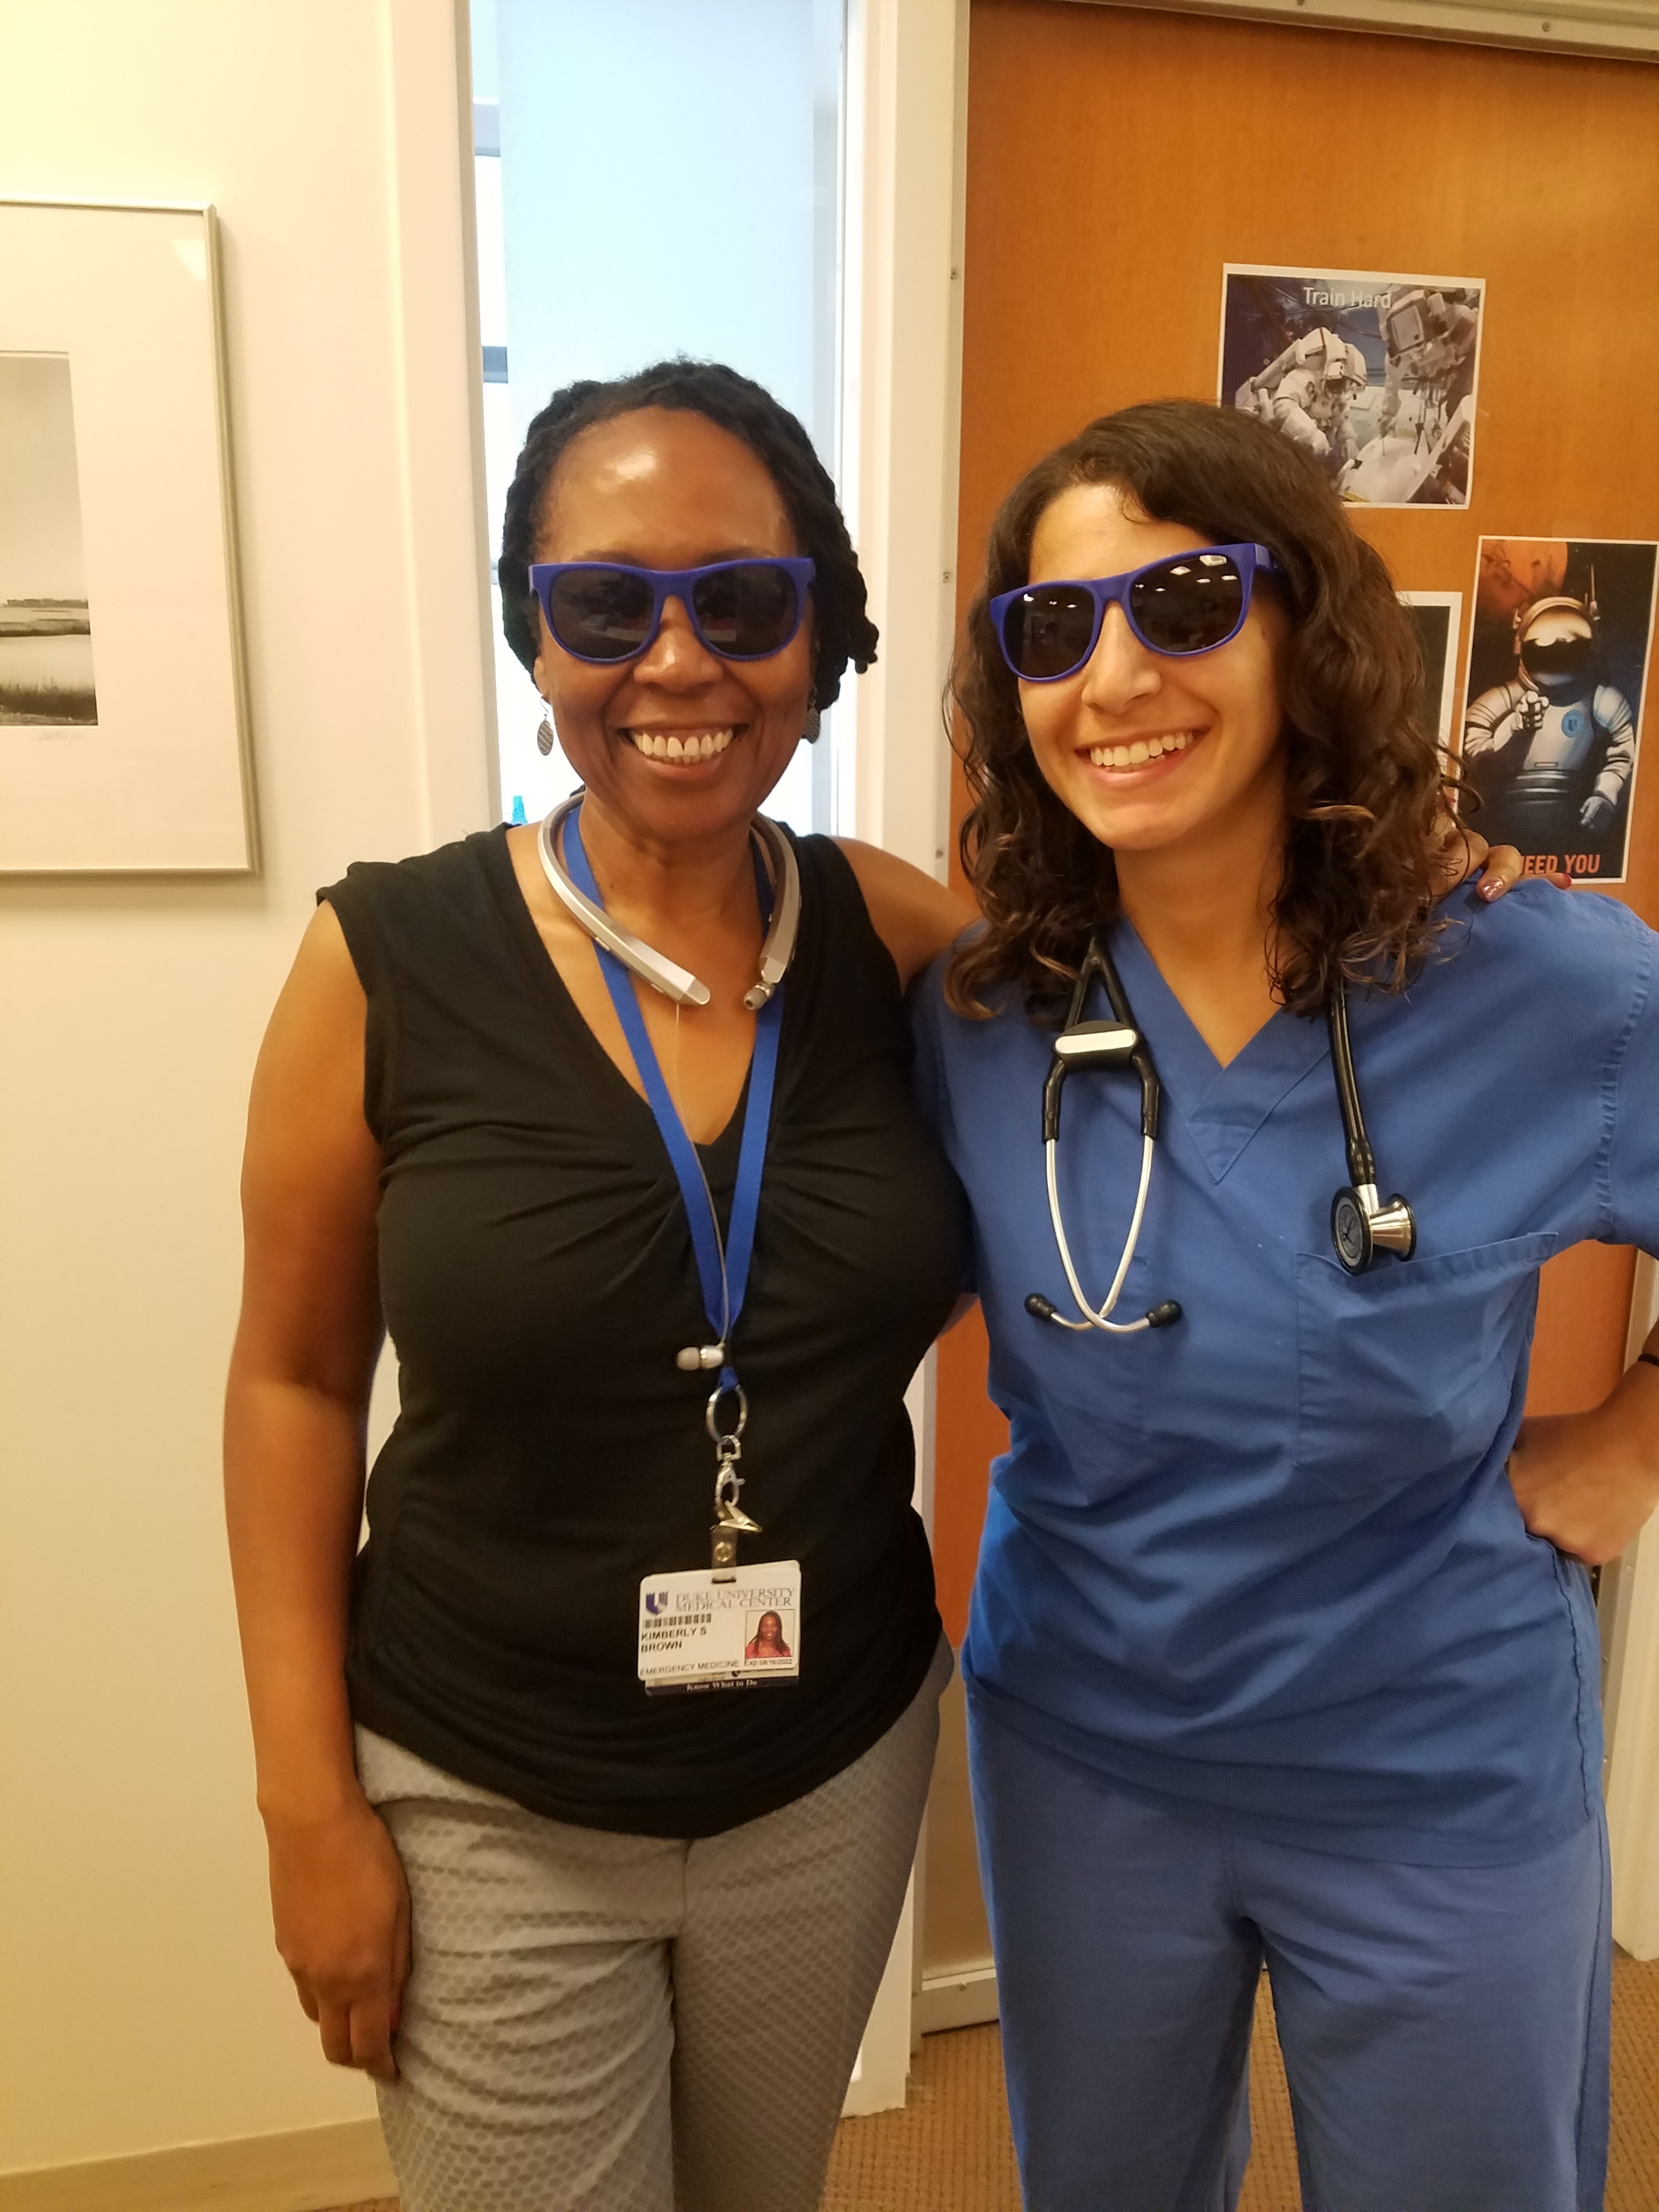 Duke doctors wearing sunglasses